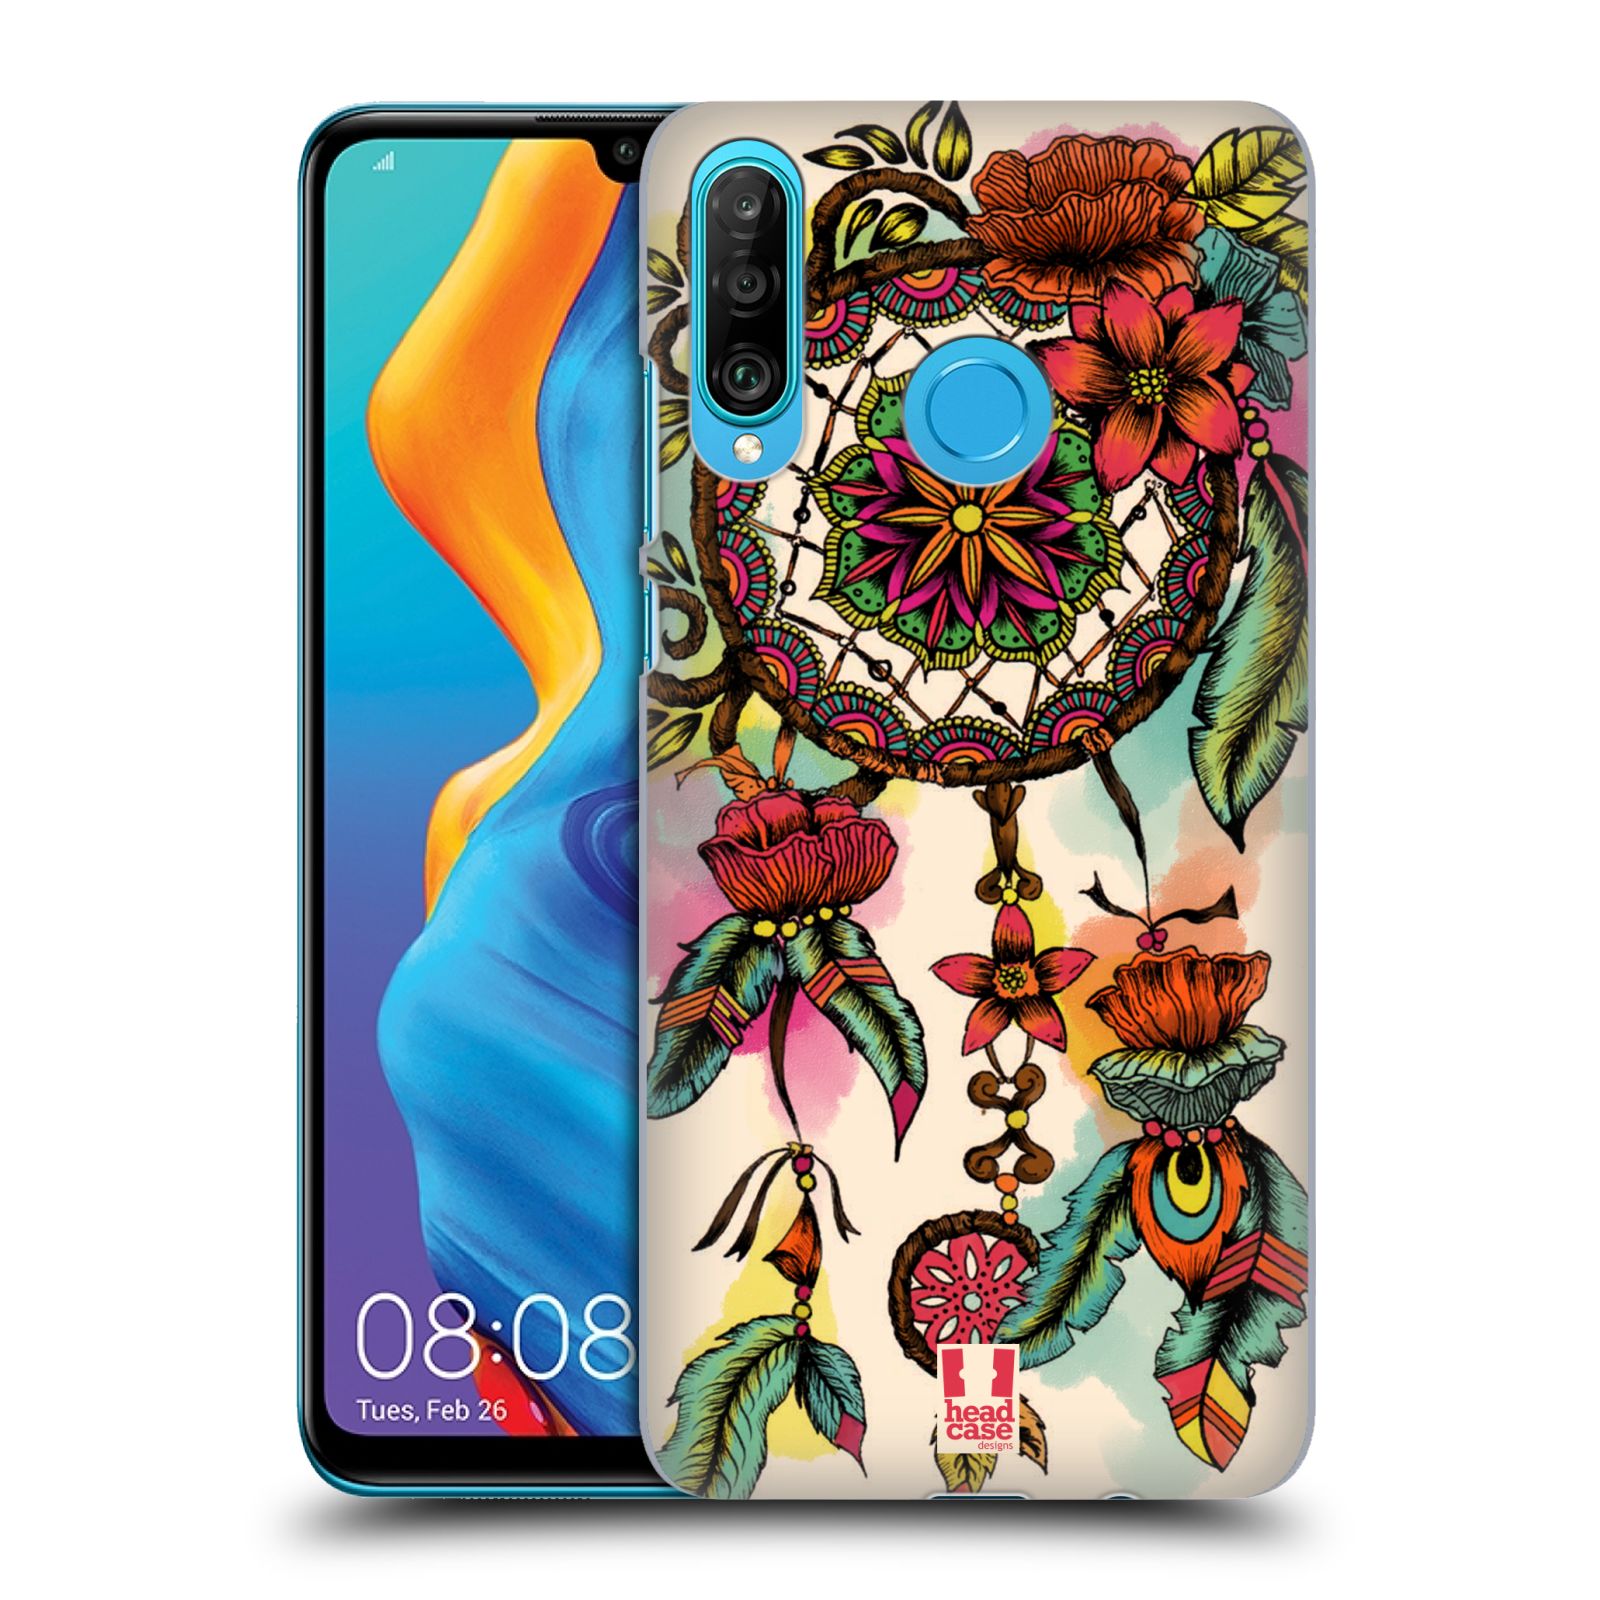 Pouzdro na mobil Huawei P30 LITE - HEAD CASE - vzor Květy lapač snů FLORID